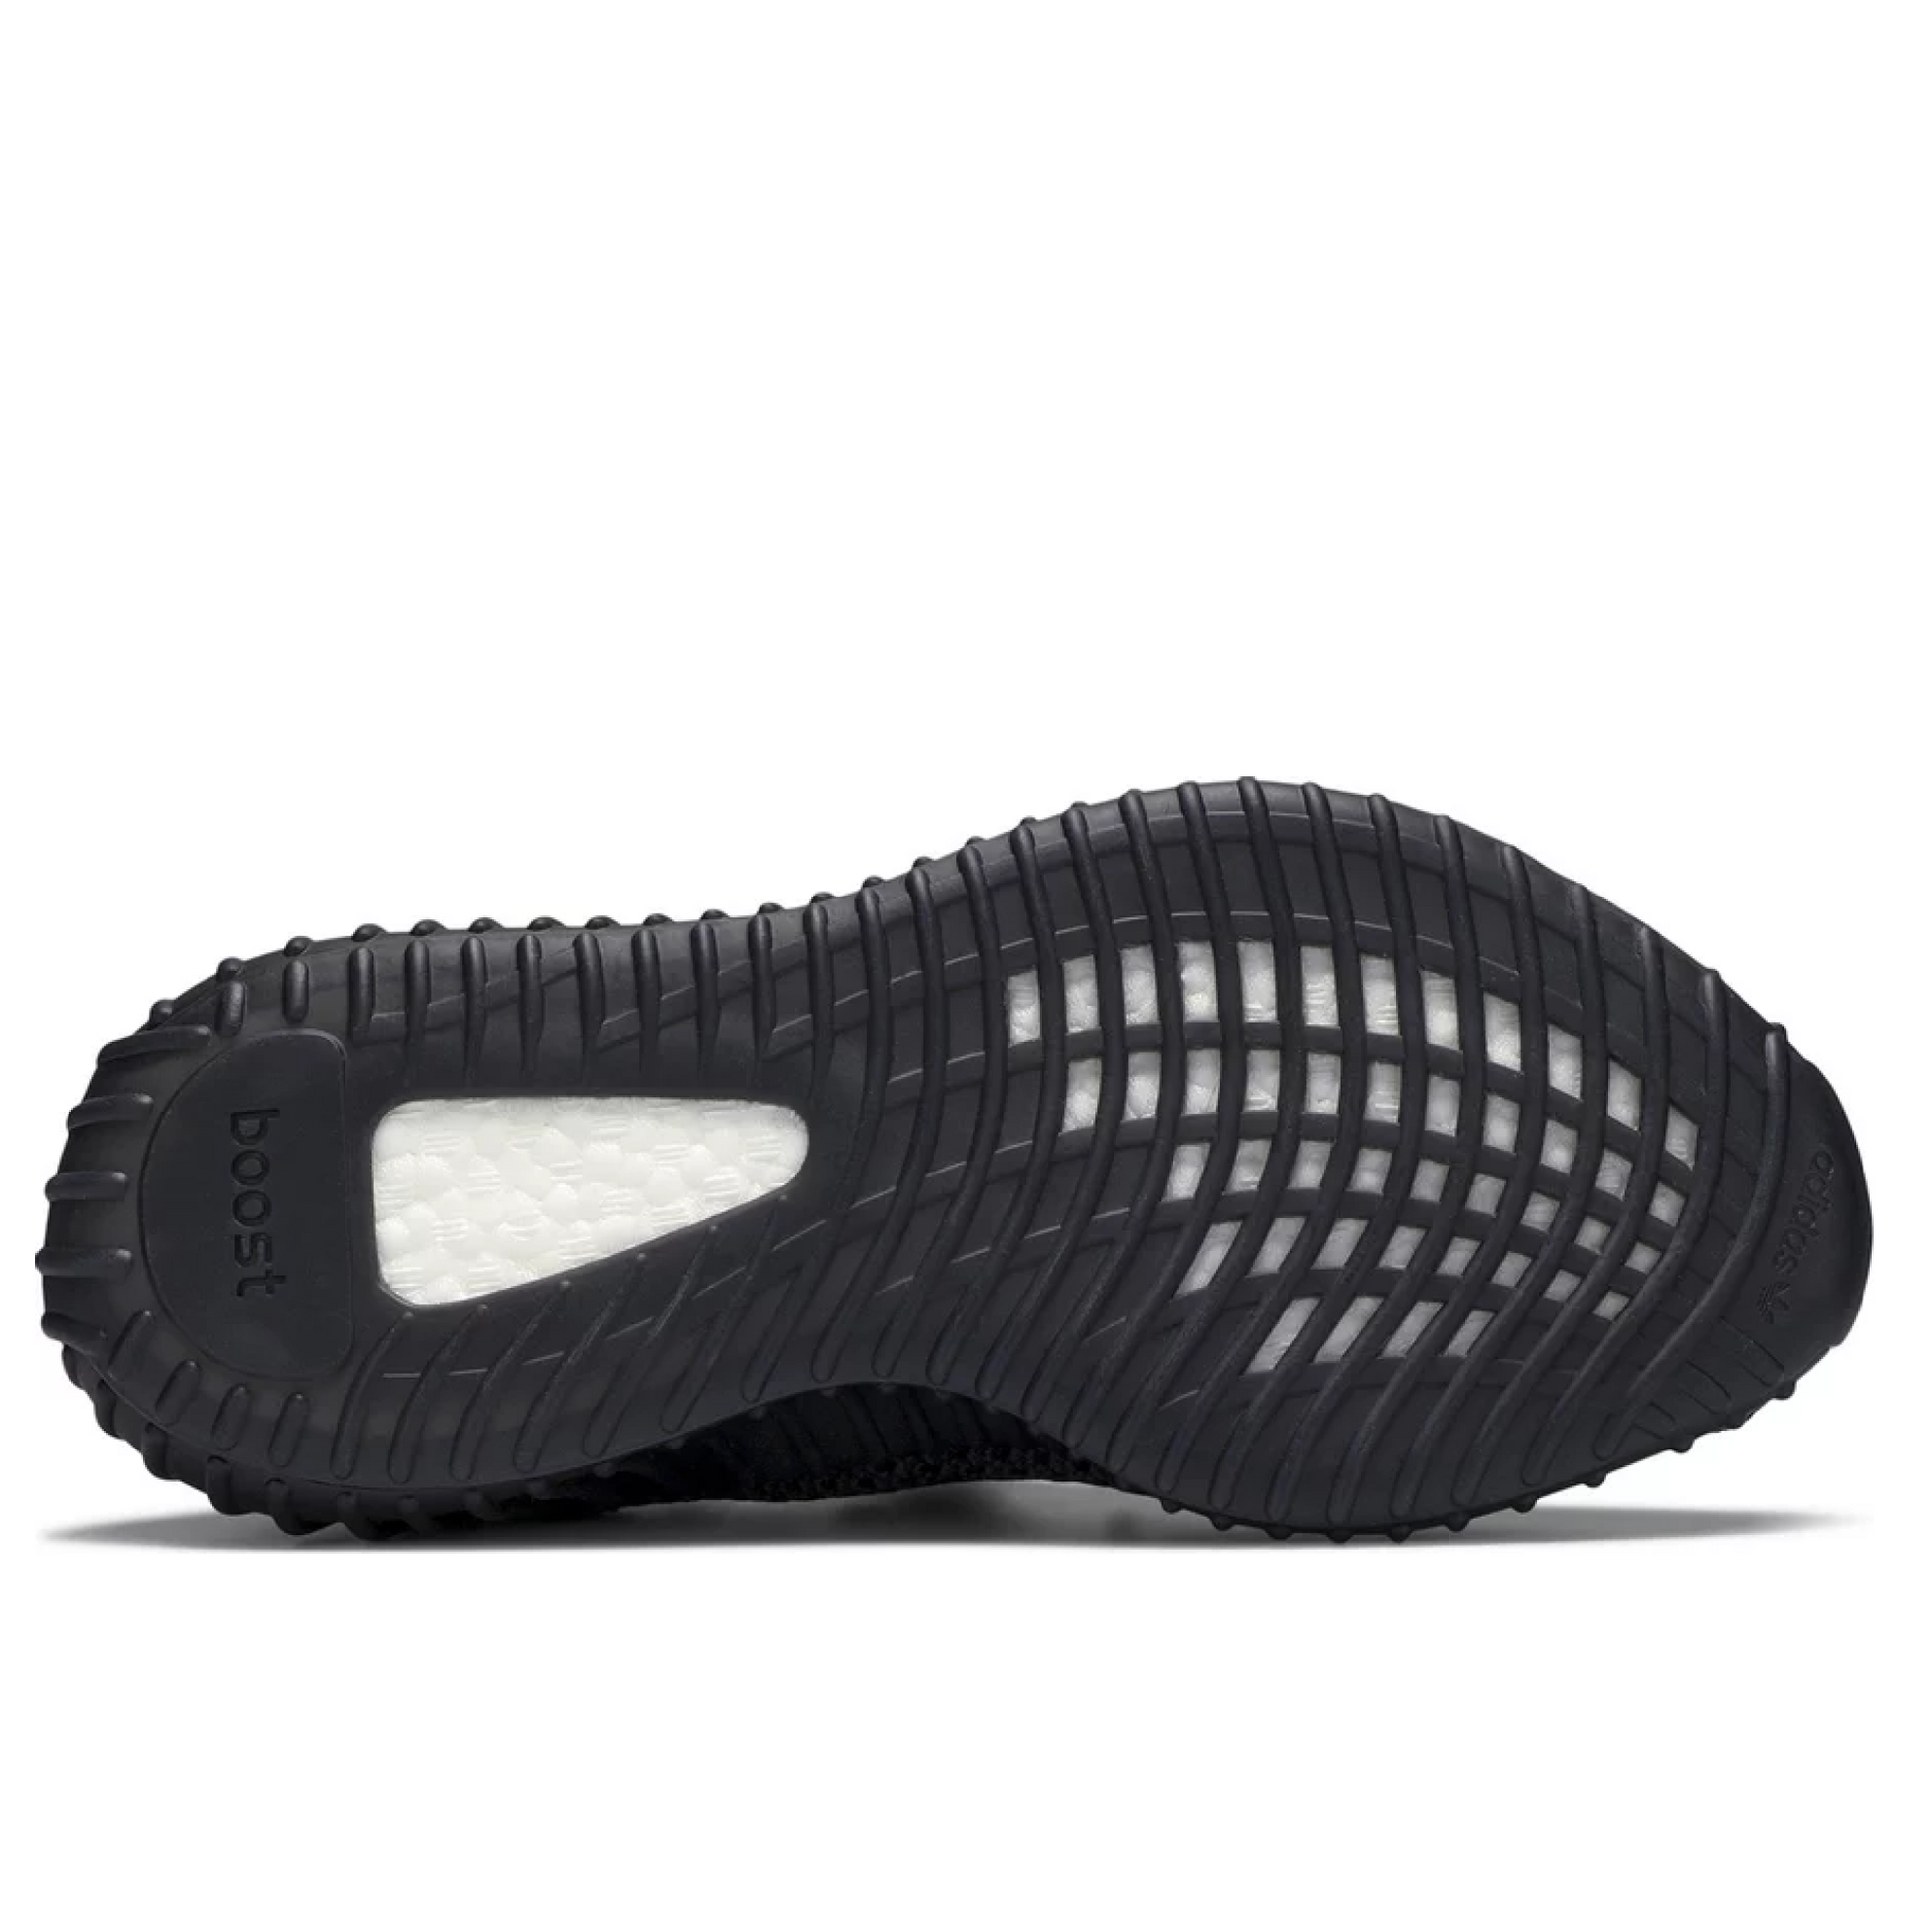 Adidas Yeezy Boost 350 V2 Black Non-Reflective Yeezy